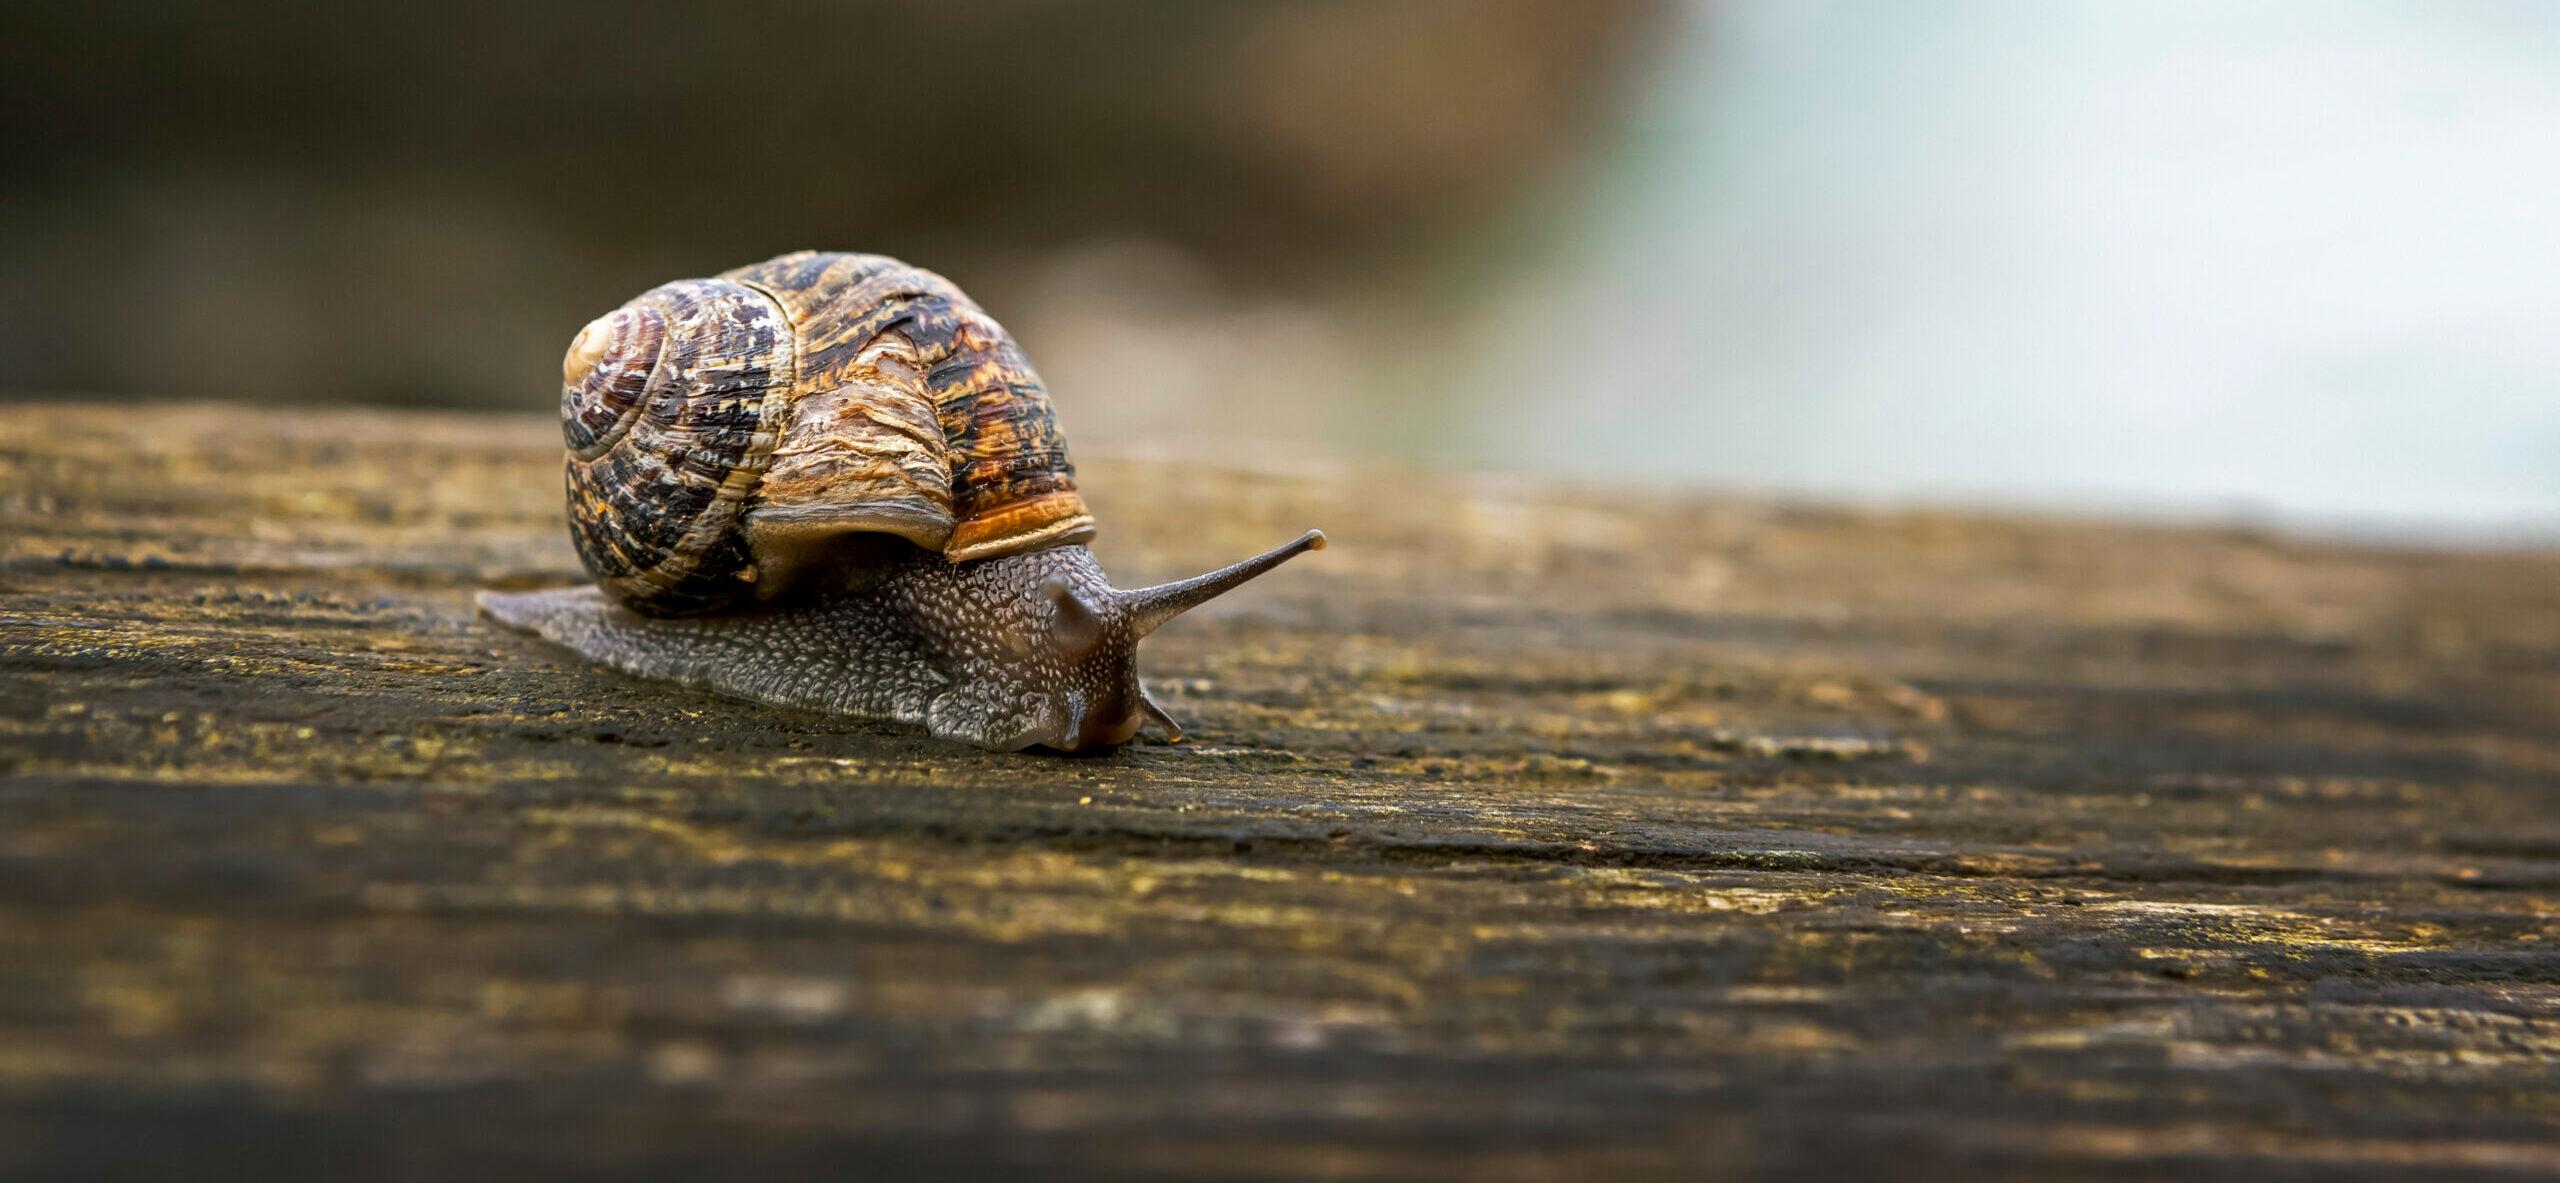 Close up of a snail on a wooden fence; Cornwall County, England Newscom/(Mega Agency TagID: depphotos219888.jpg) [Photo via Mega Agency]